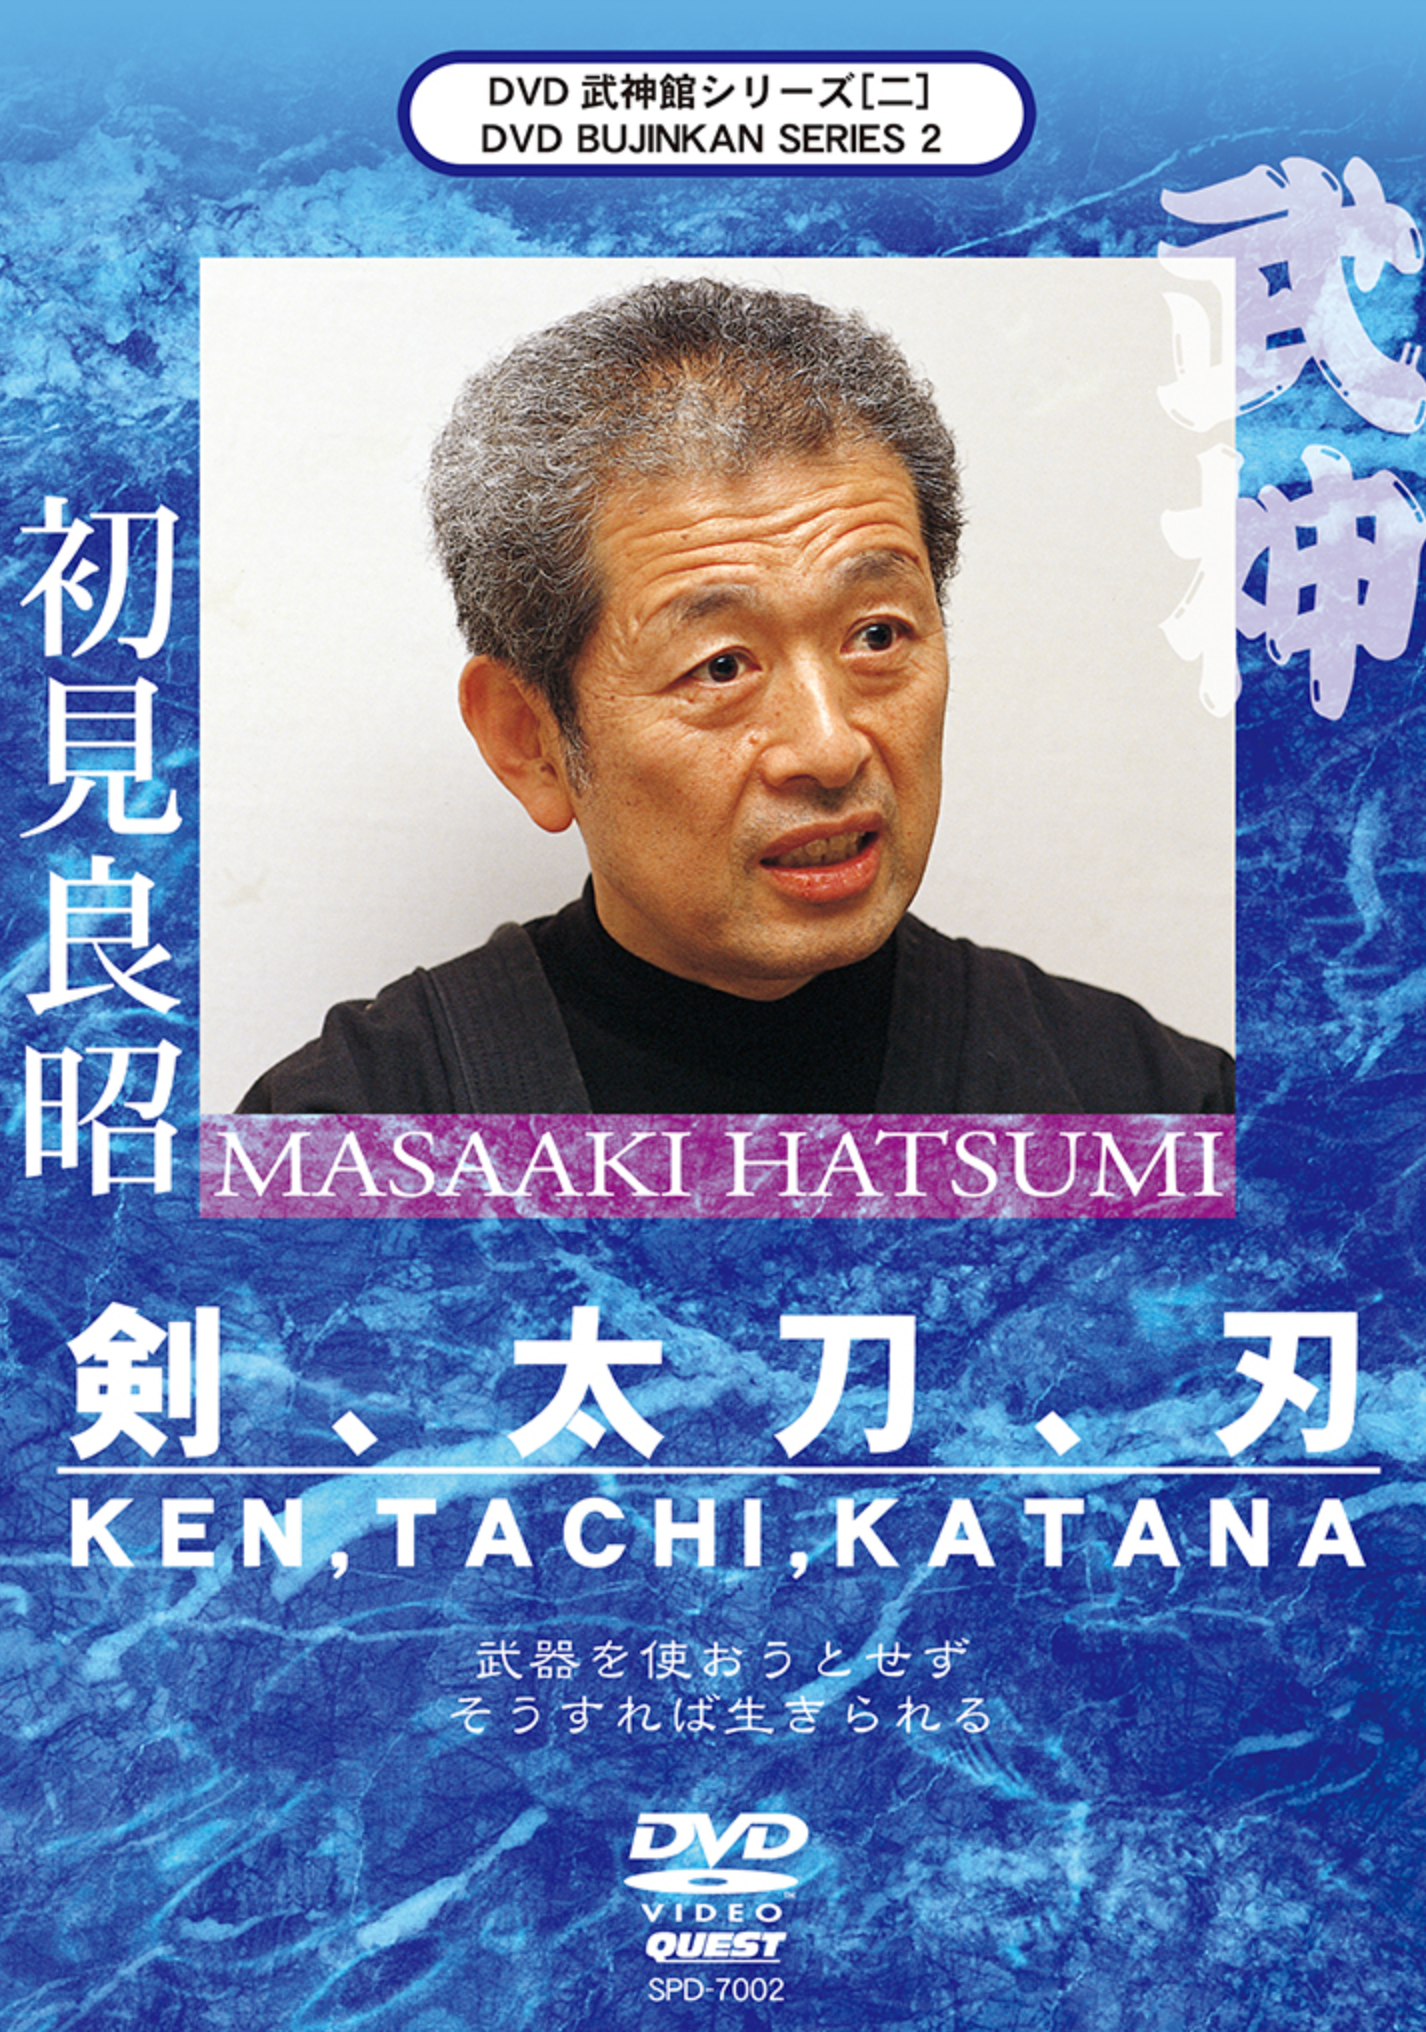 Bujinkan DVD Series 2: Ken, Tachi & Katana with Masaaki Hatsumi - Budovideos Inc